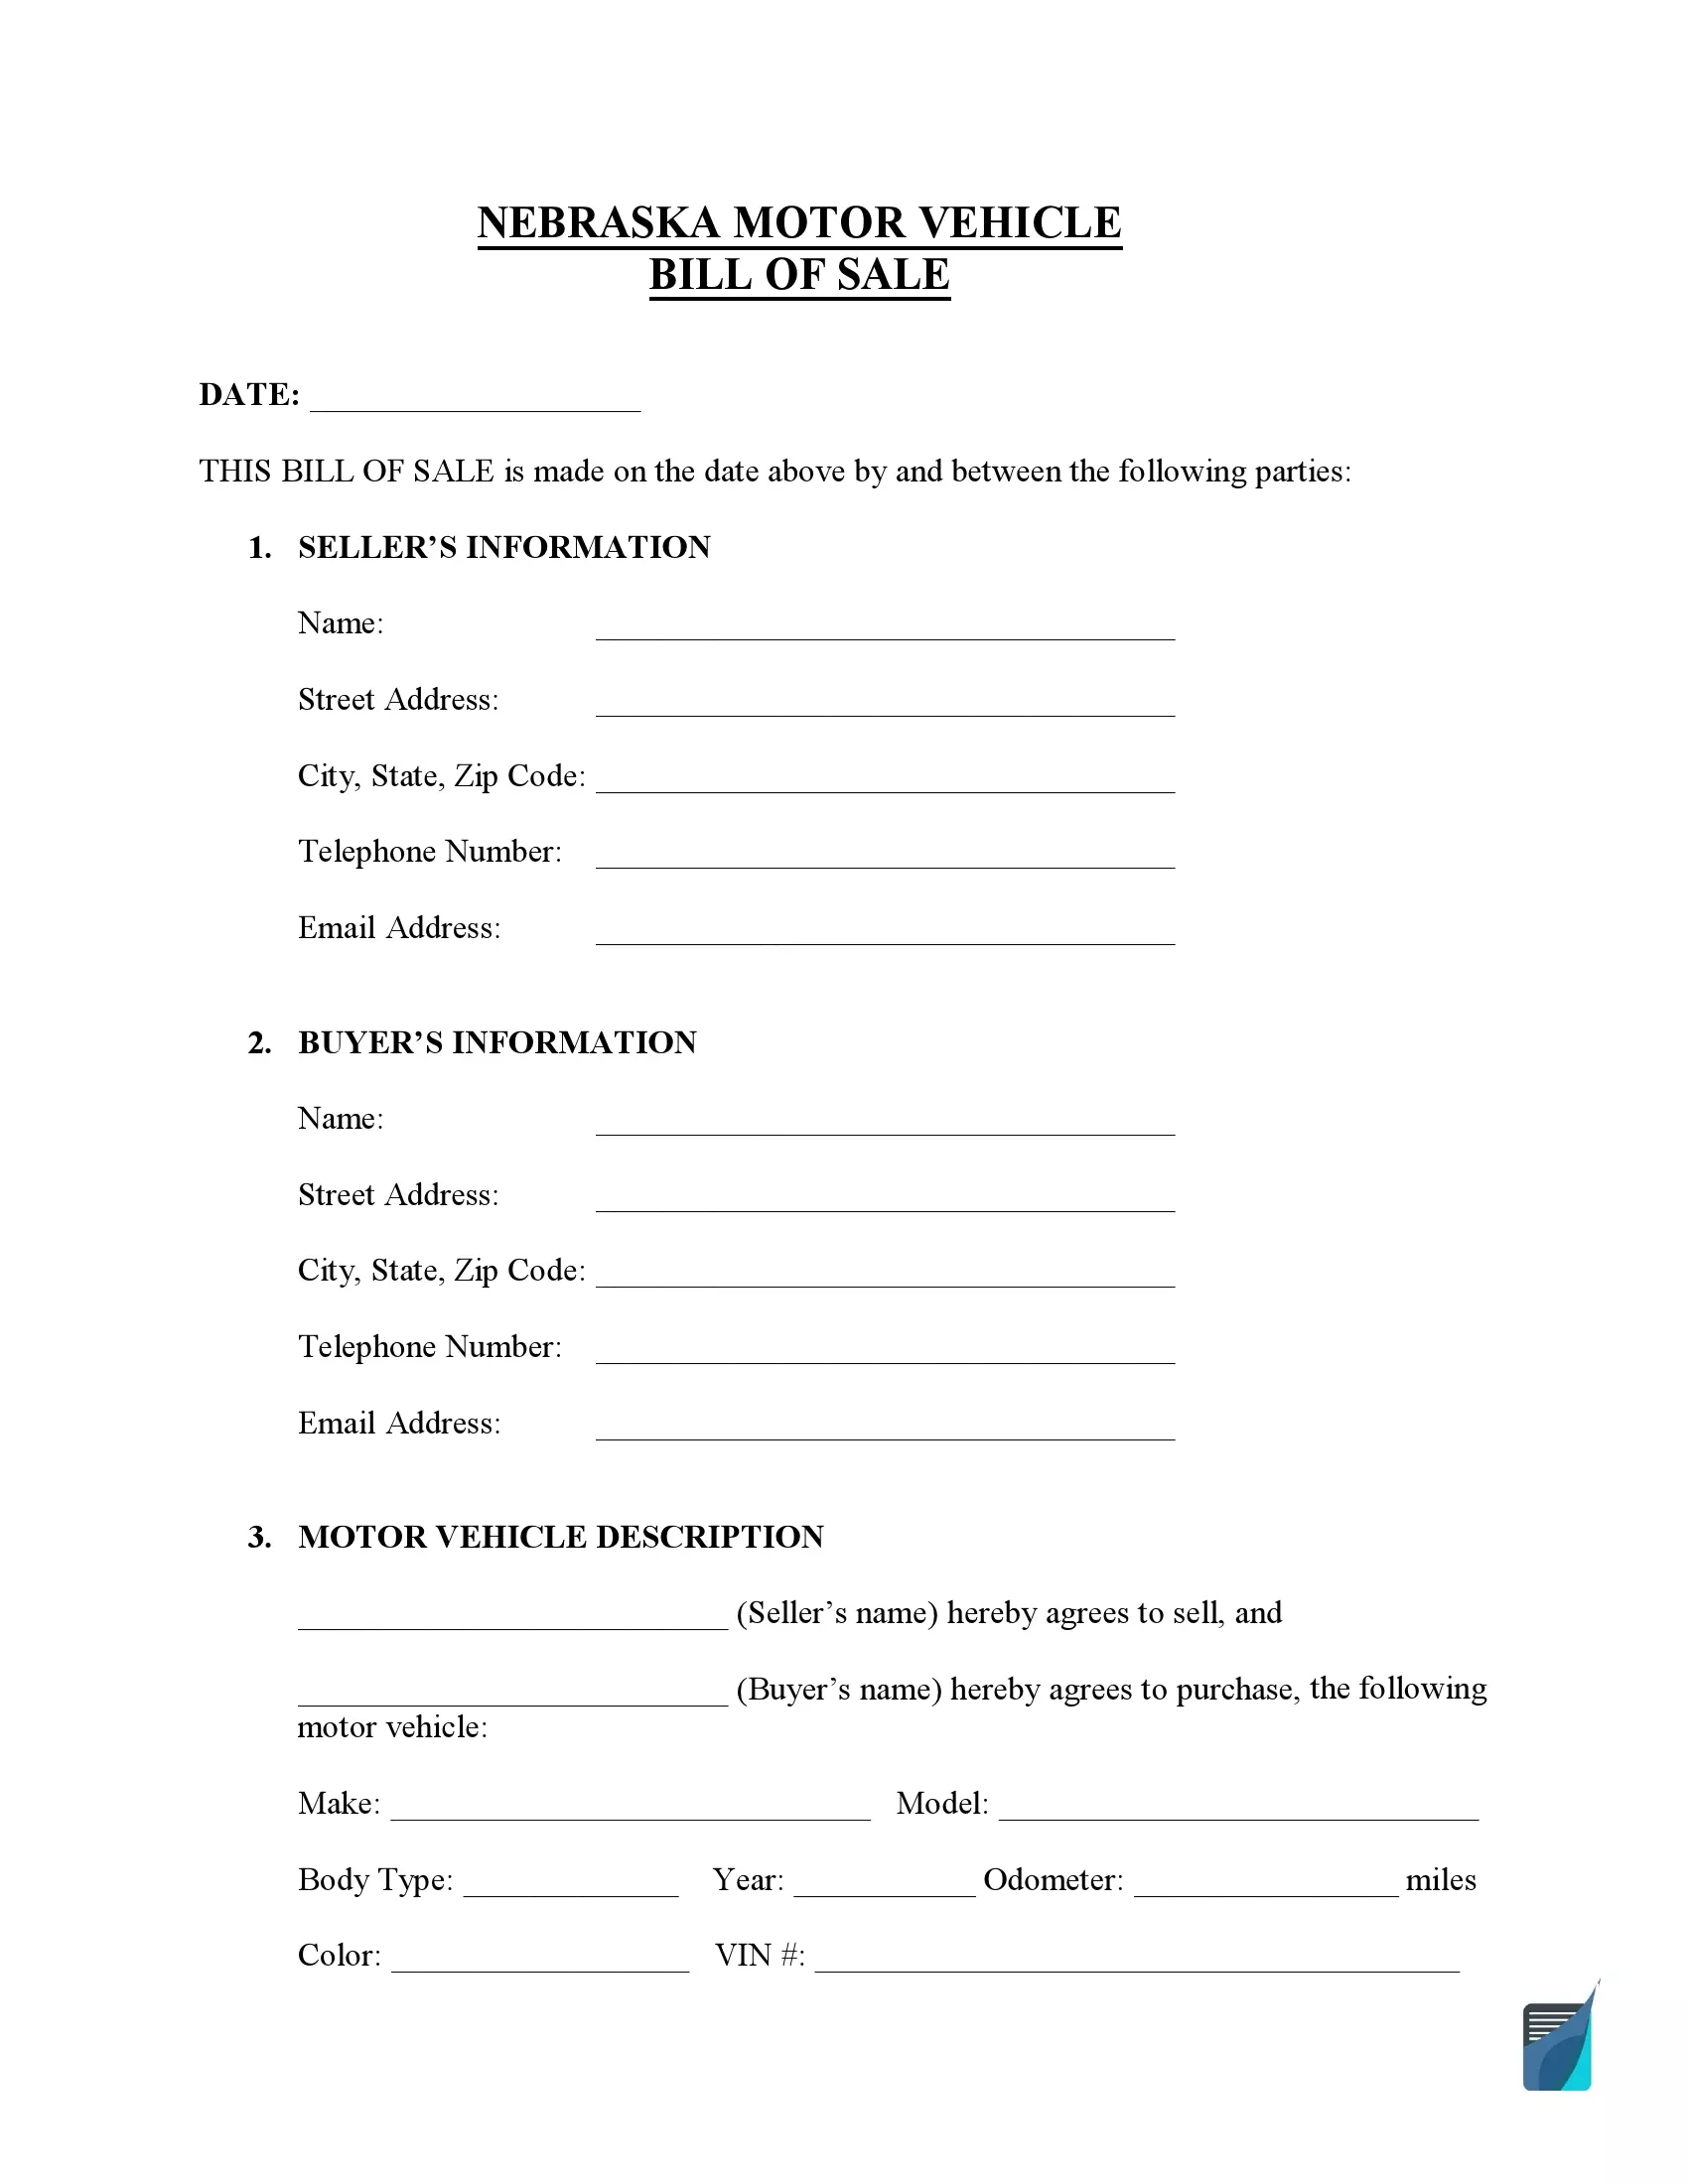 Nebraska motor vehicle bill of sale template